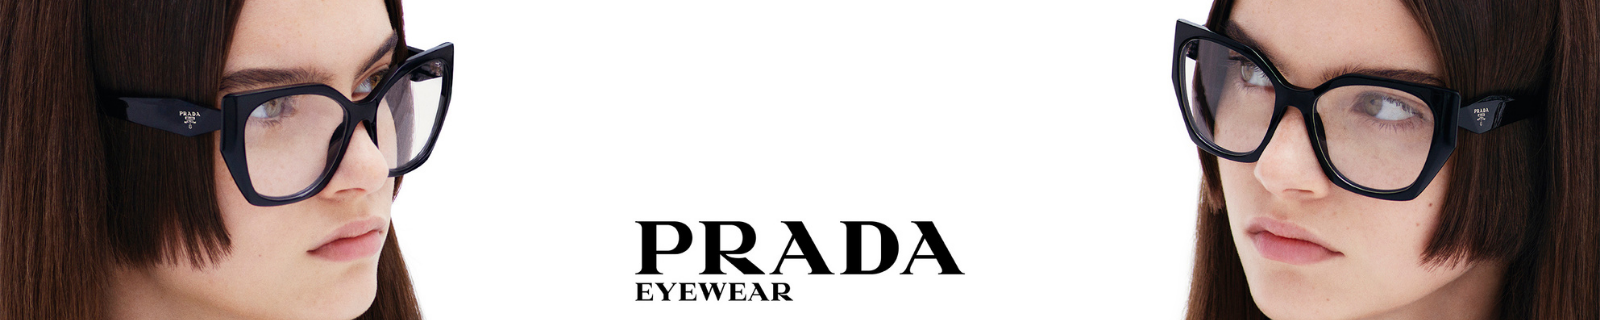 Hunny, the Devil wears Prada Symbole sunglasses | Vision Direct AU